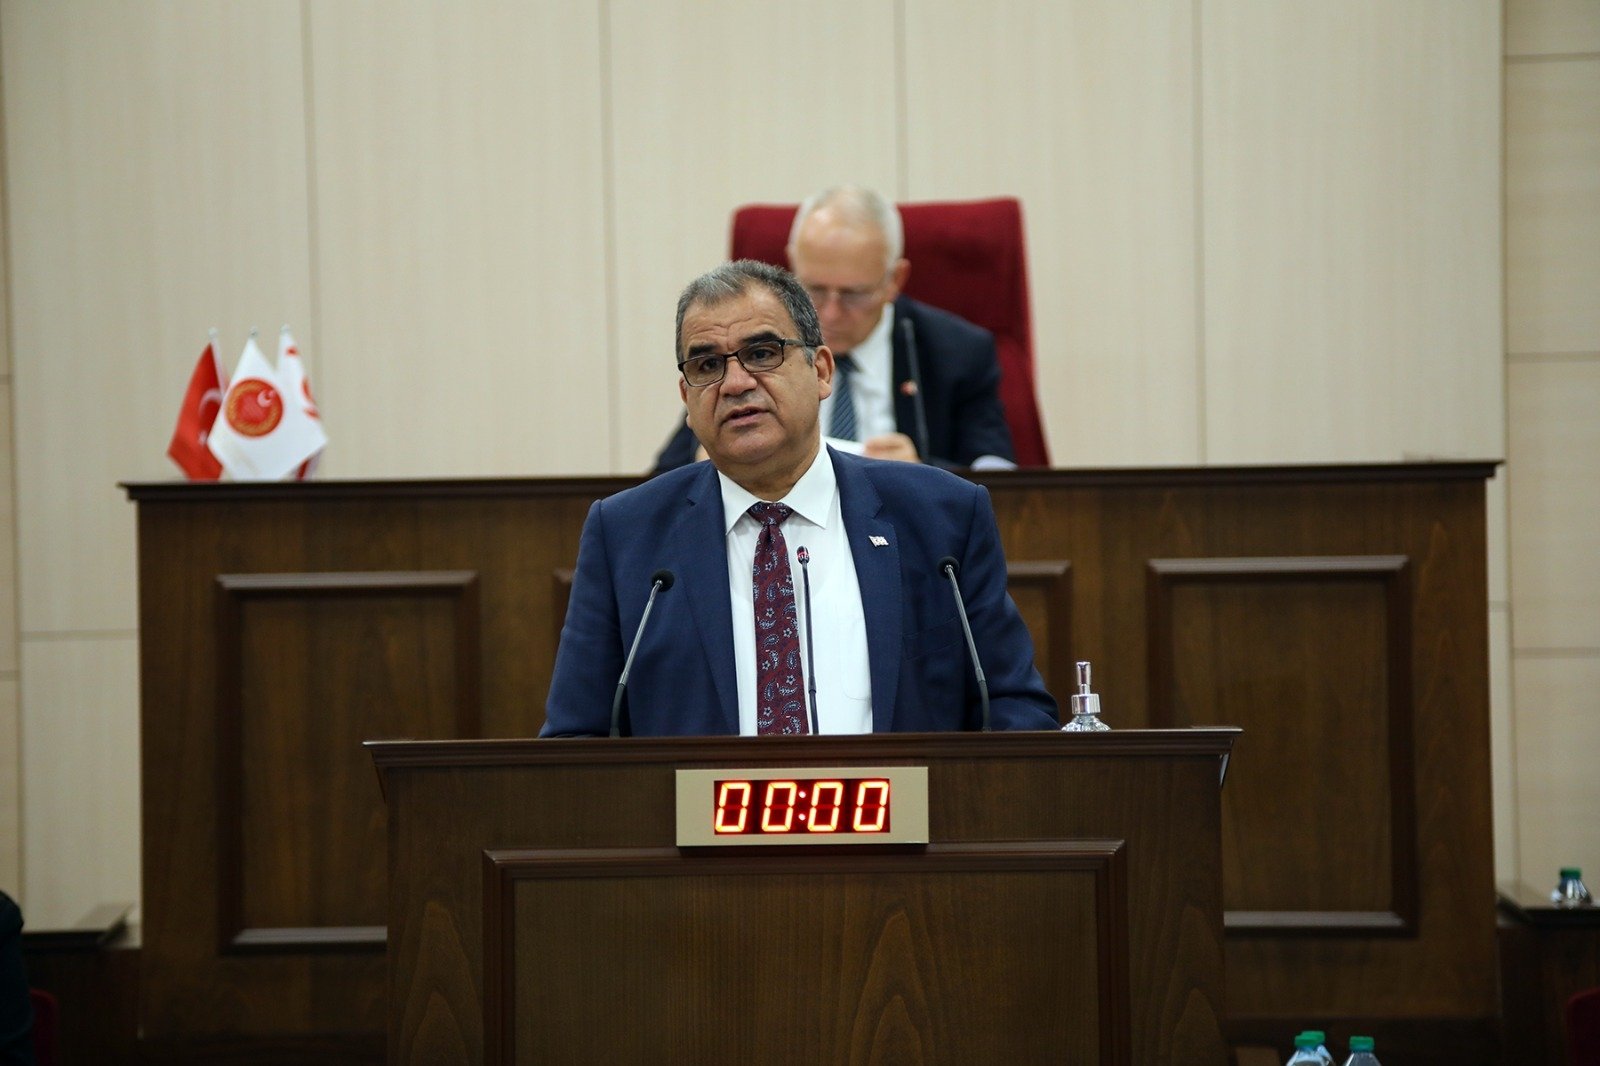 Turkish Cypriot Prime Minister Faiz Sucuoğlu speaks at the parliament in Lefkoşa (Nicosia), TRNC, March 3, 2022. (AA Photo)